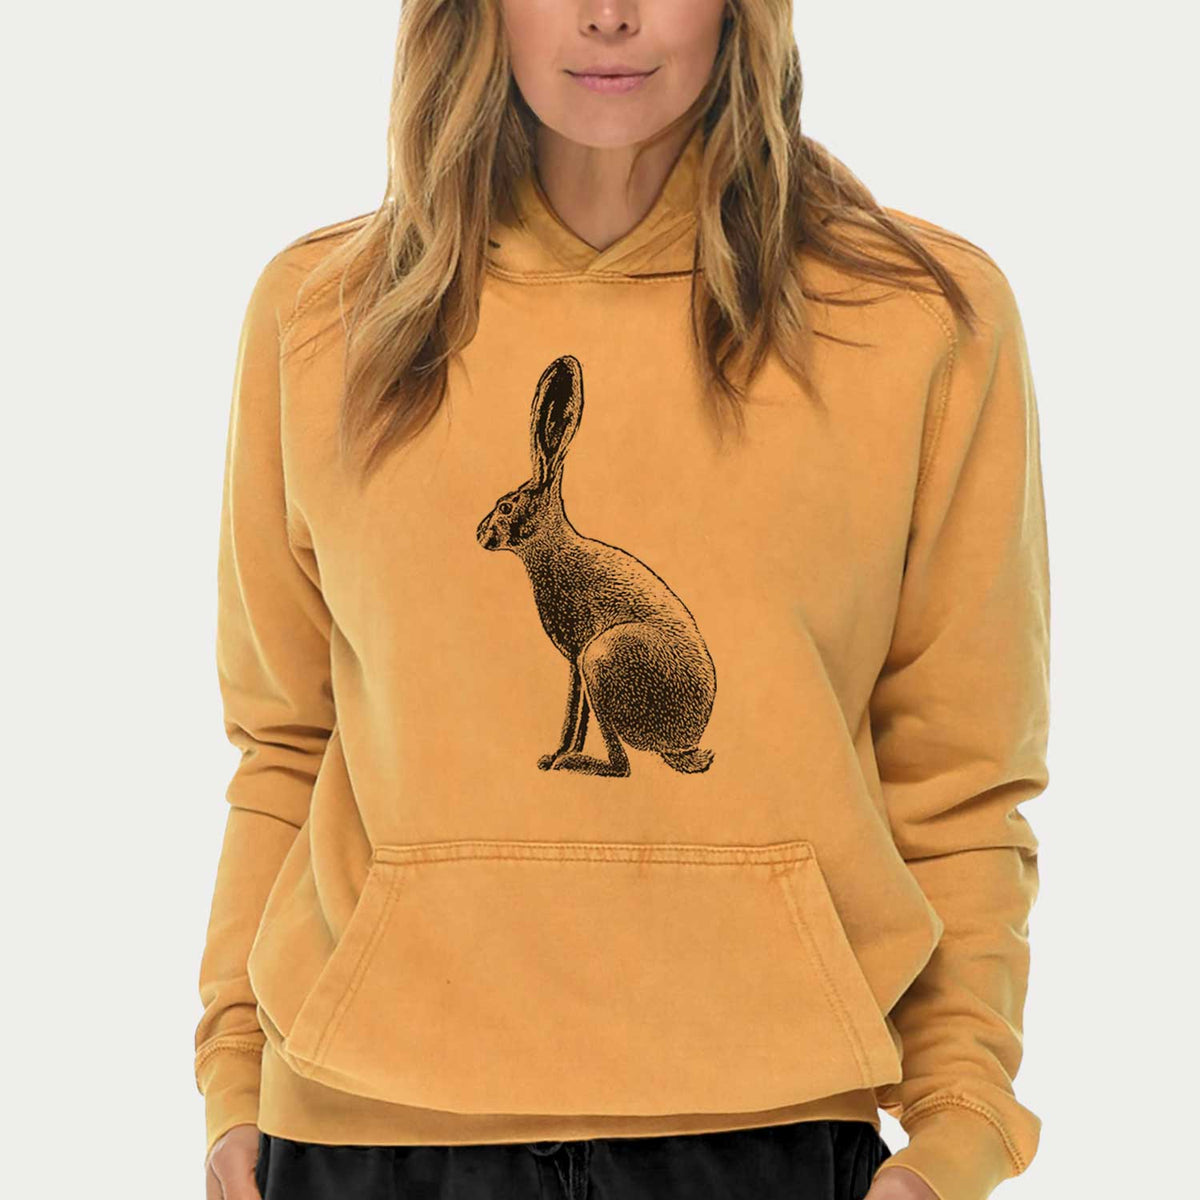 Wild California Hare - Black-tailed Jackrabbit  - Mid-Weight Unisex Vintage 100% Cotton Hoodie